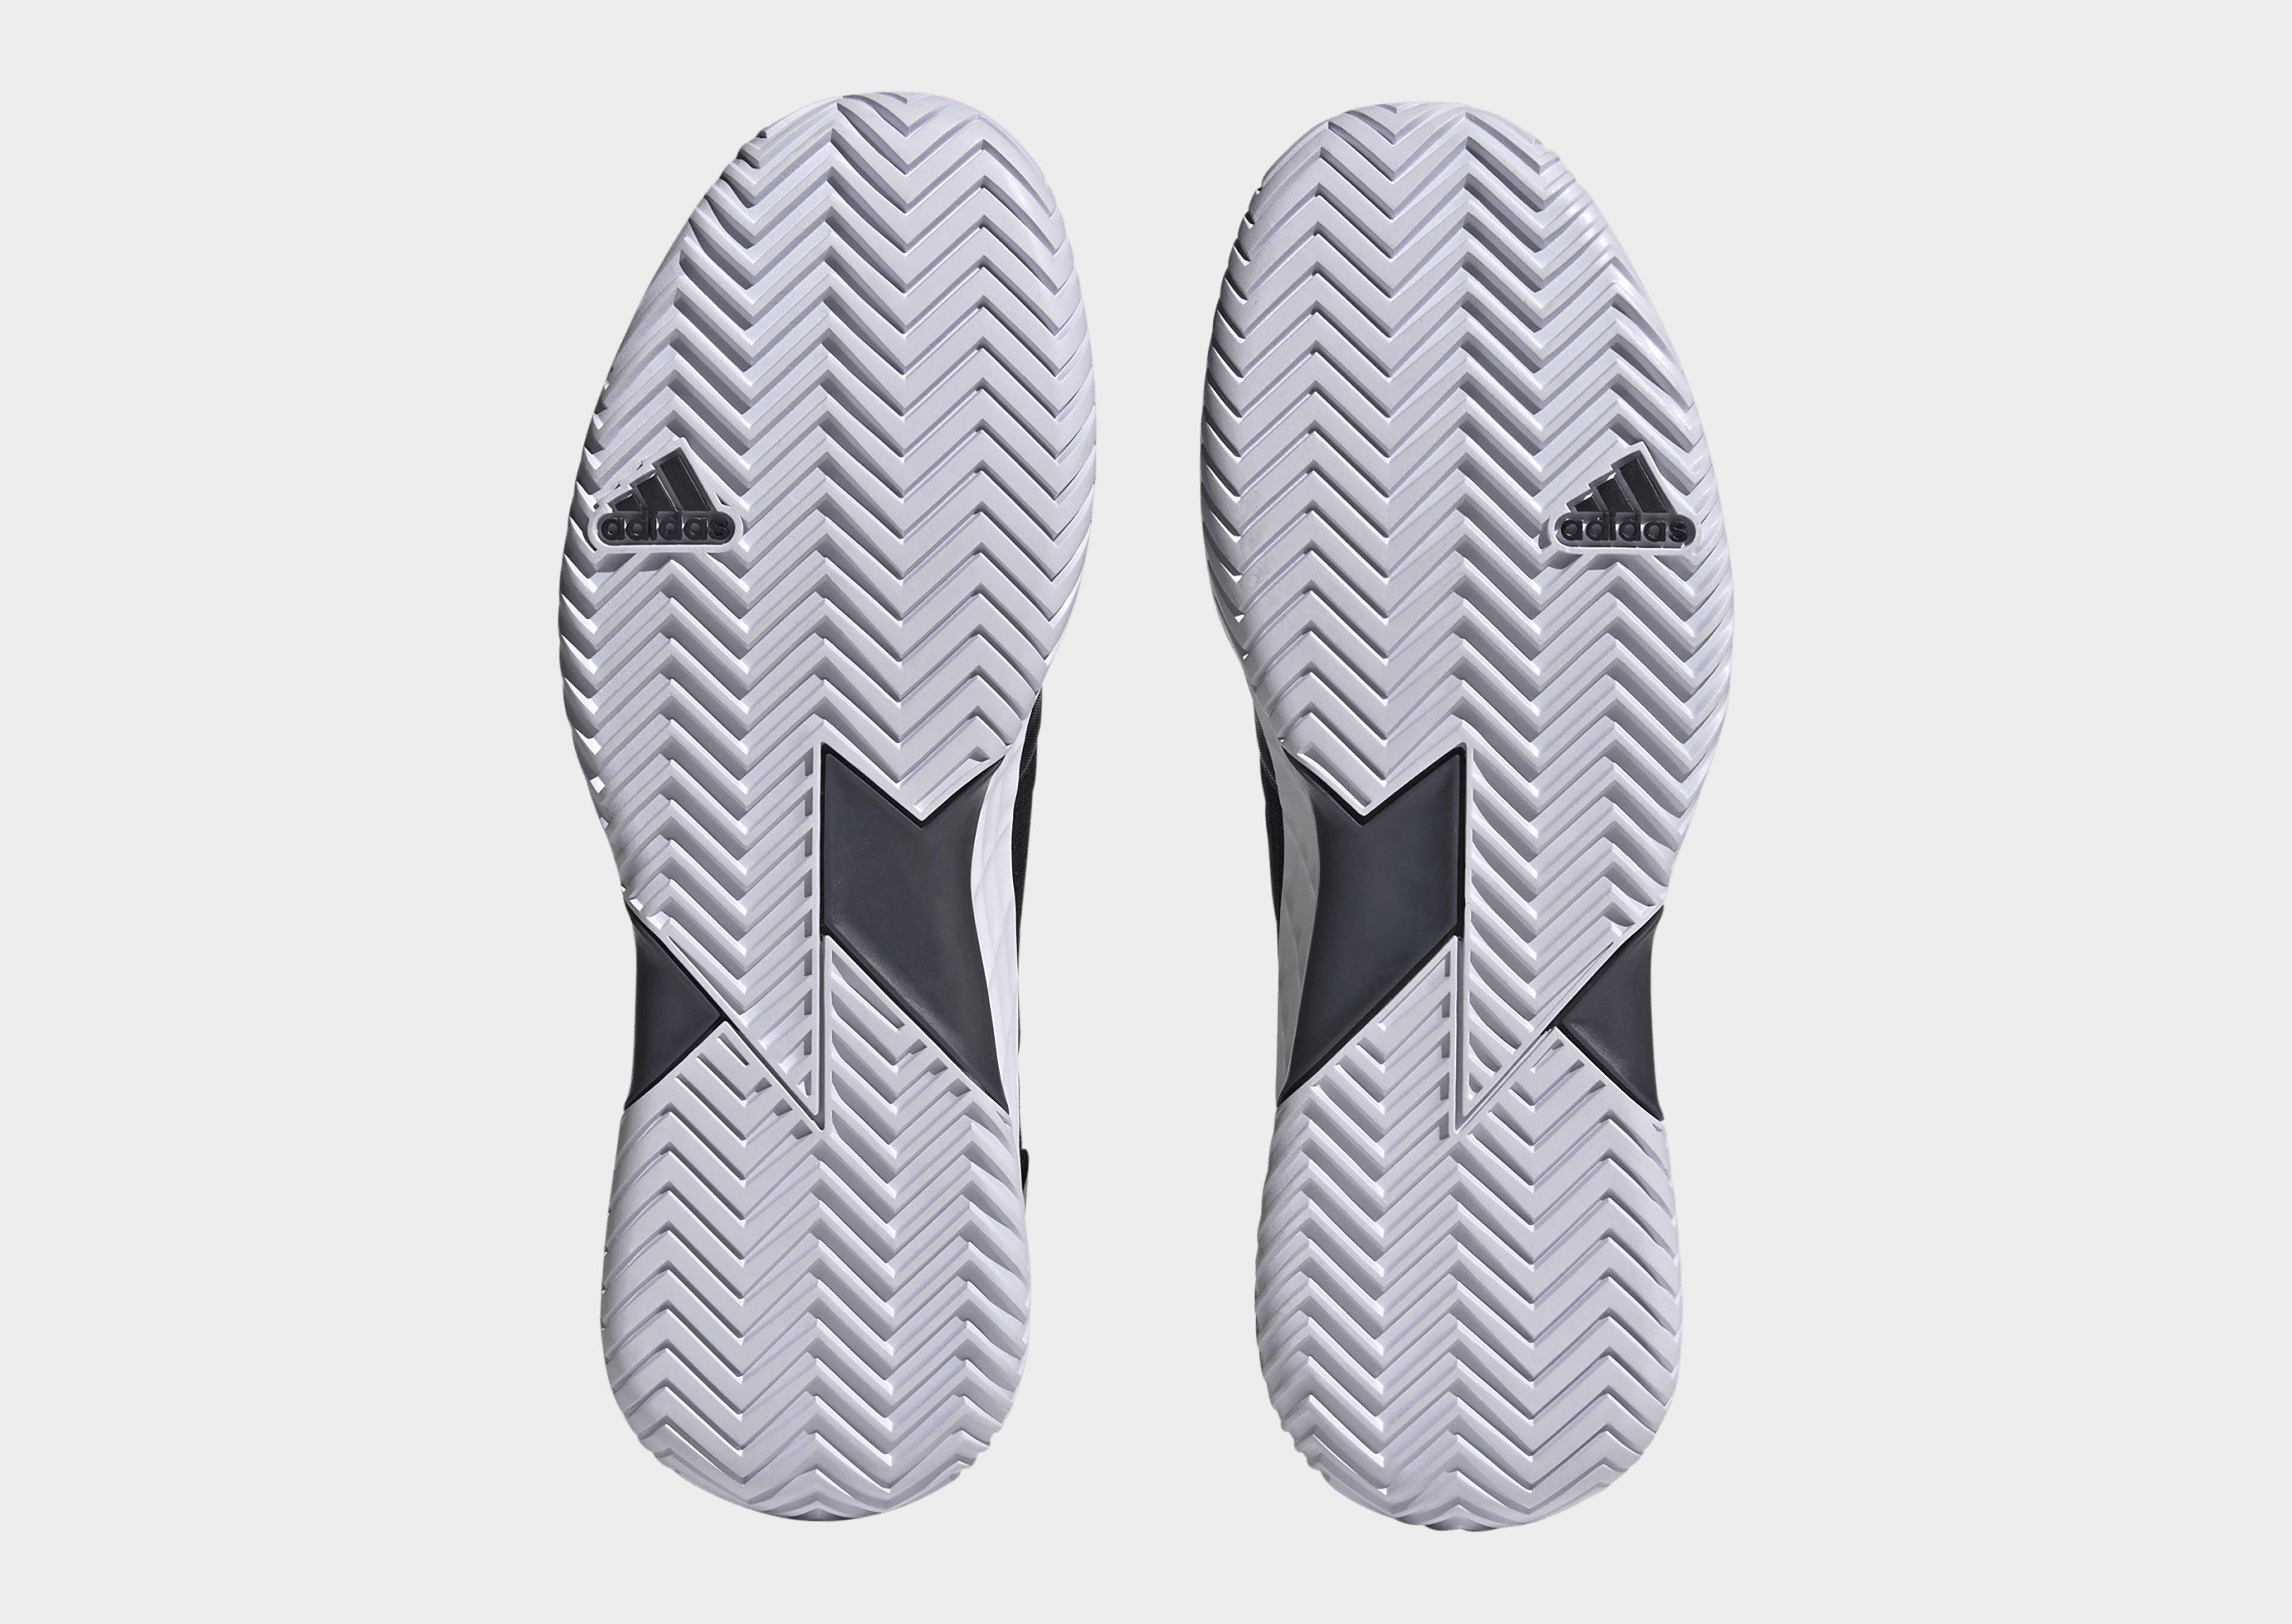 Adidas Men's Adizero Ubersonic 4.1 Tennis Shoes, Size 11, White/Black/Silver